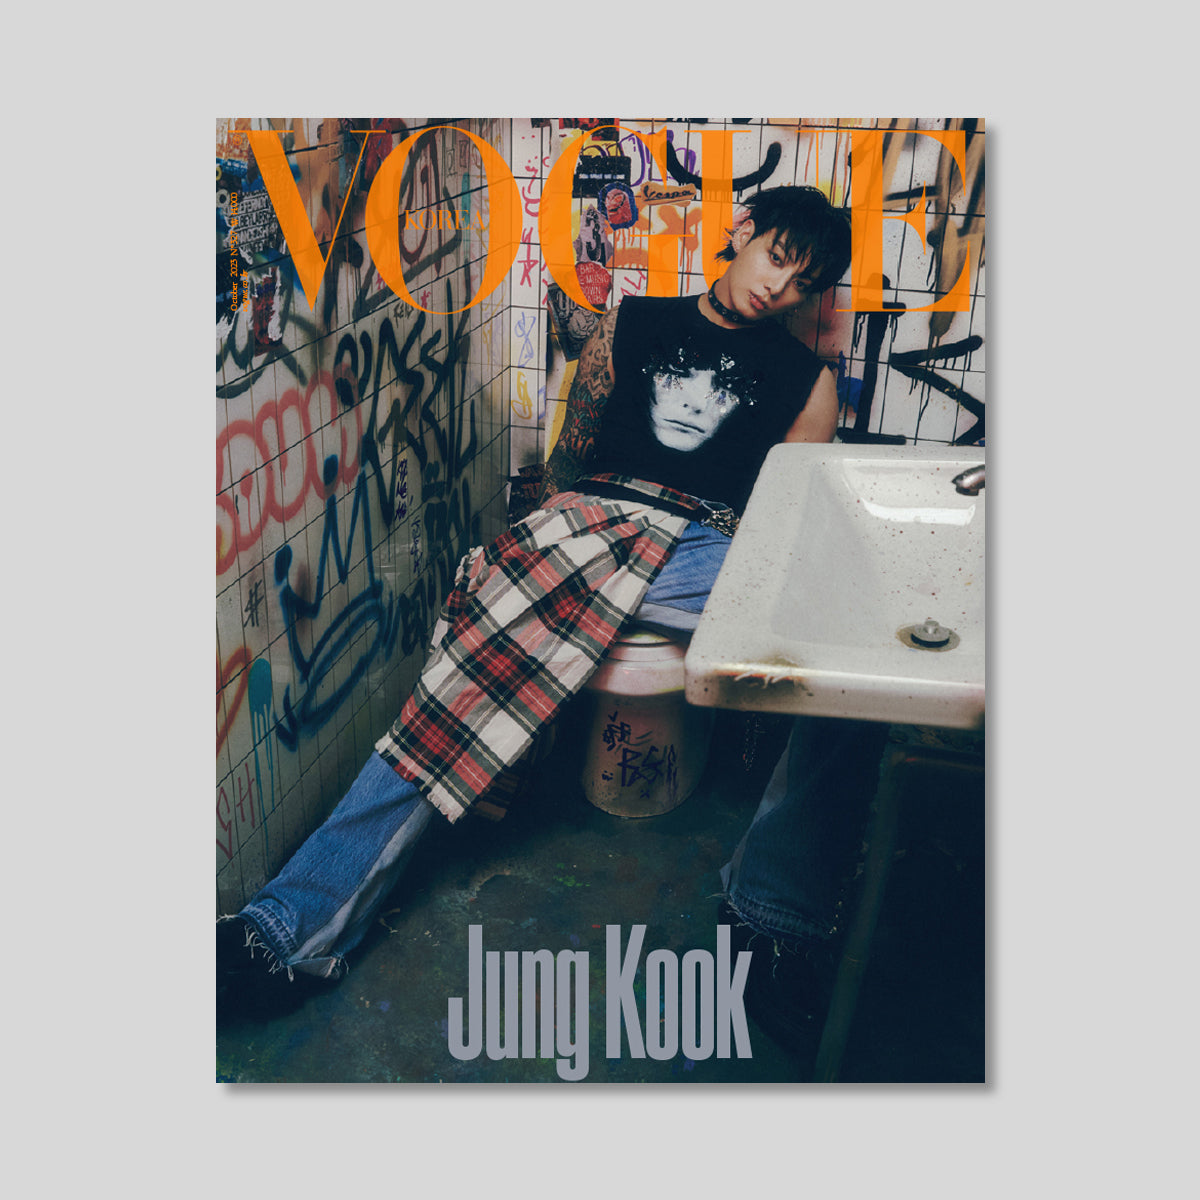 Jung Kook (BTS) - VOGUE Magazine (D TYPE)